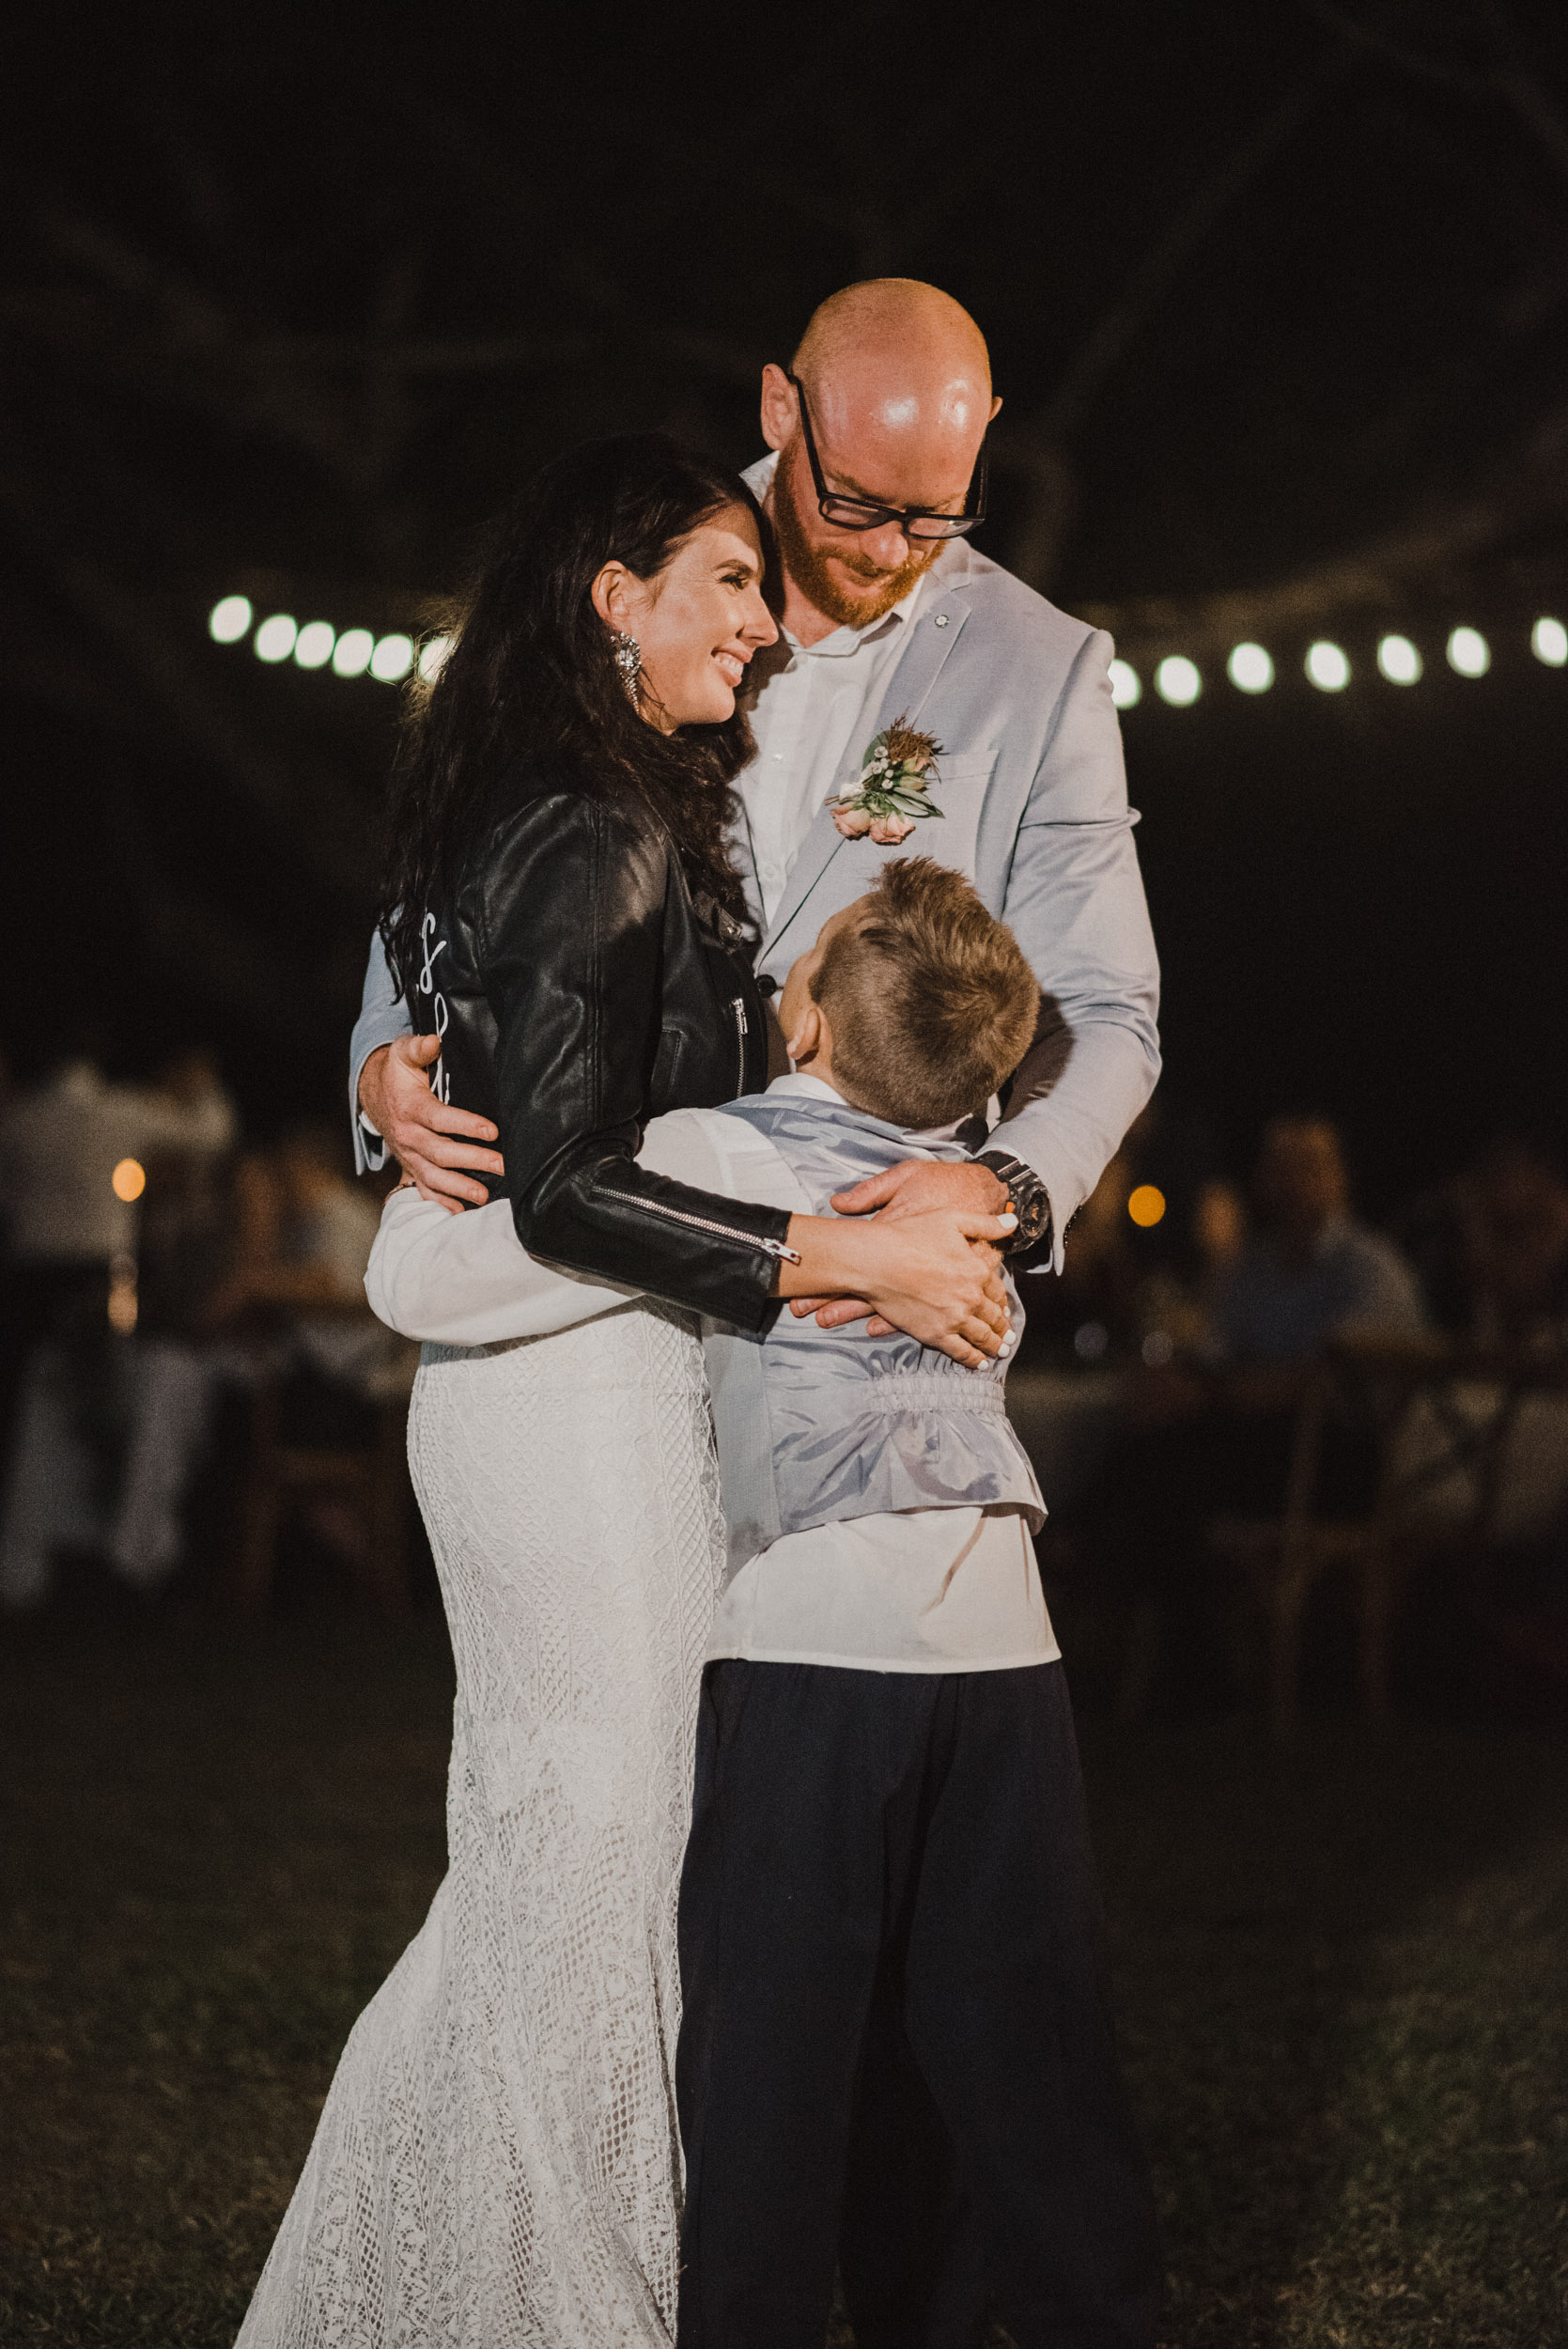 The Raw Photographer - Cairns Wedding Photography - Mareeba Queensland - Australian Outback wedding - Dress Made With Love Bridal - Ceremony Reception Venue Inspiration-75.jpg